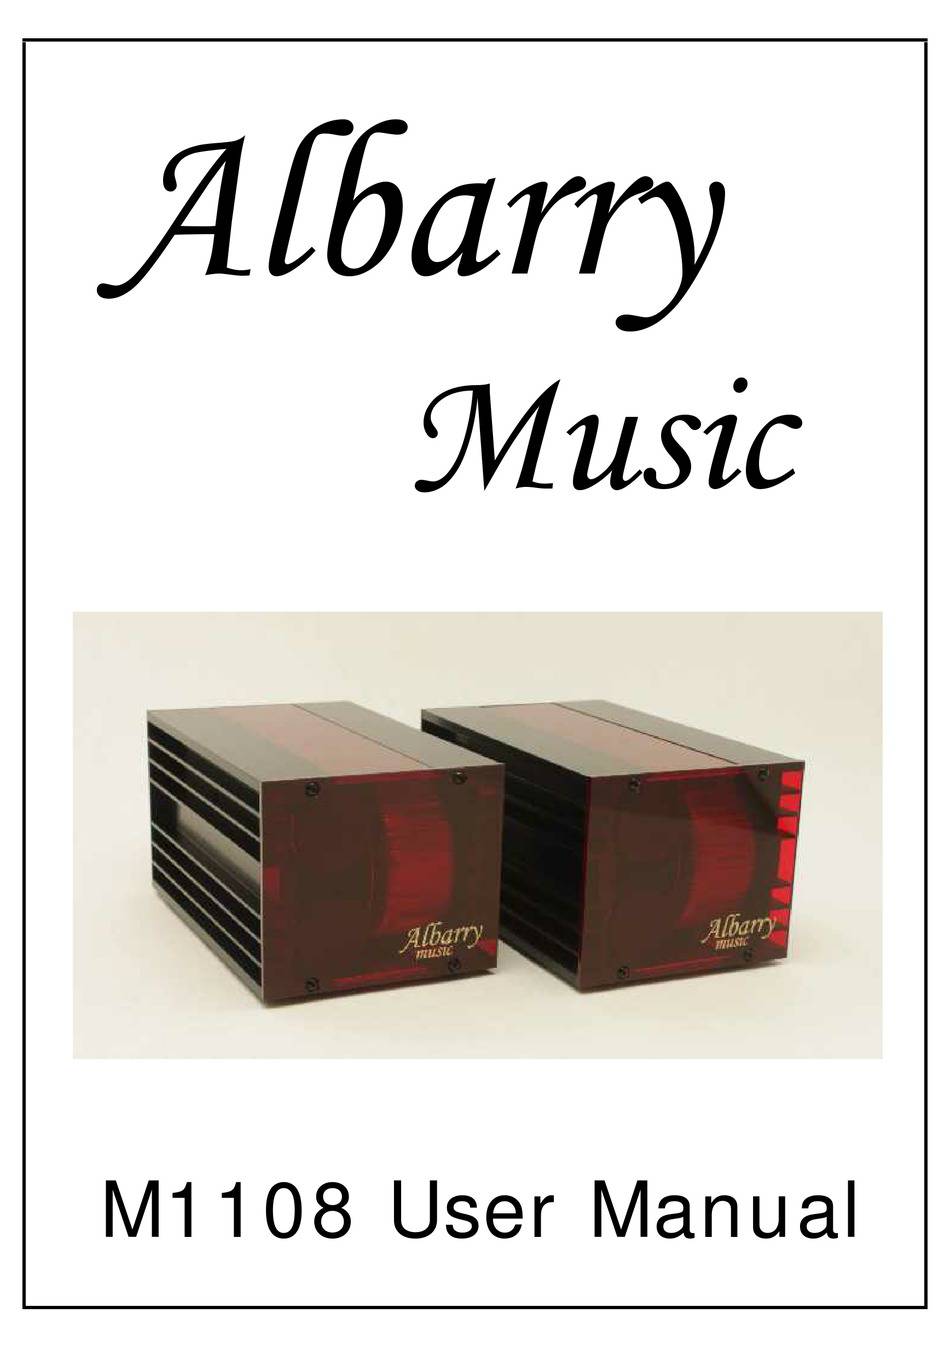 Albarry Music M1108